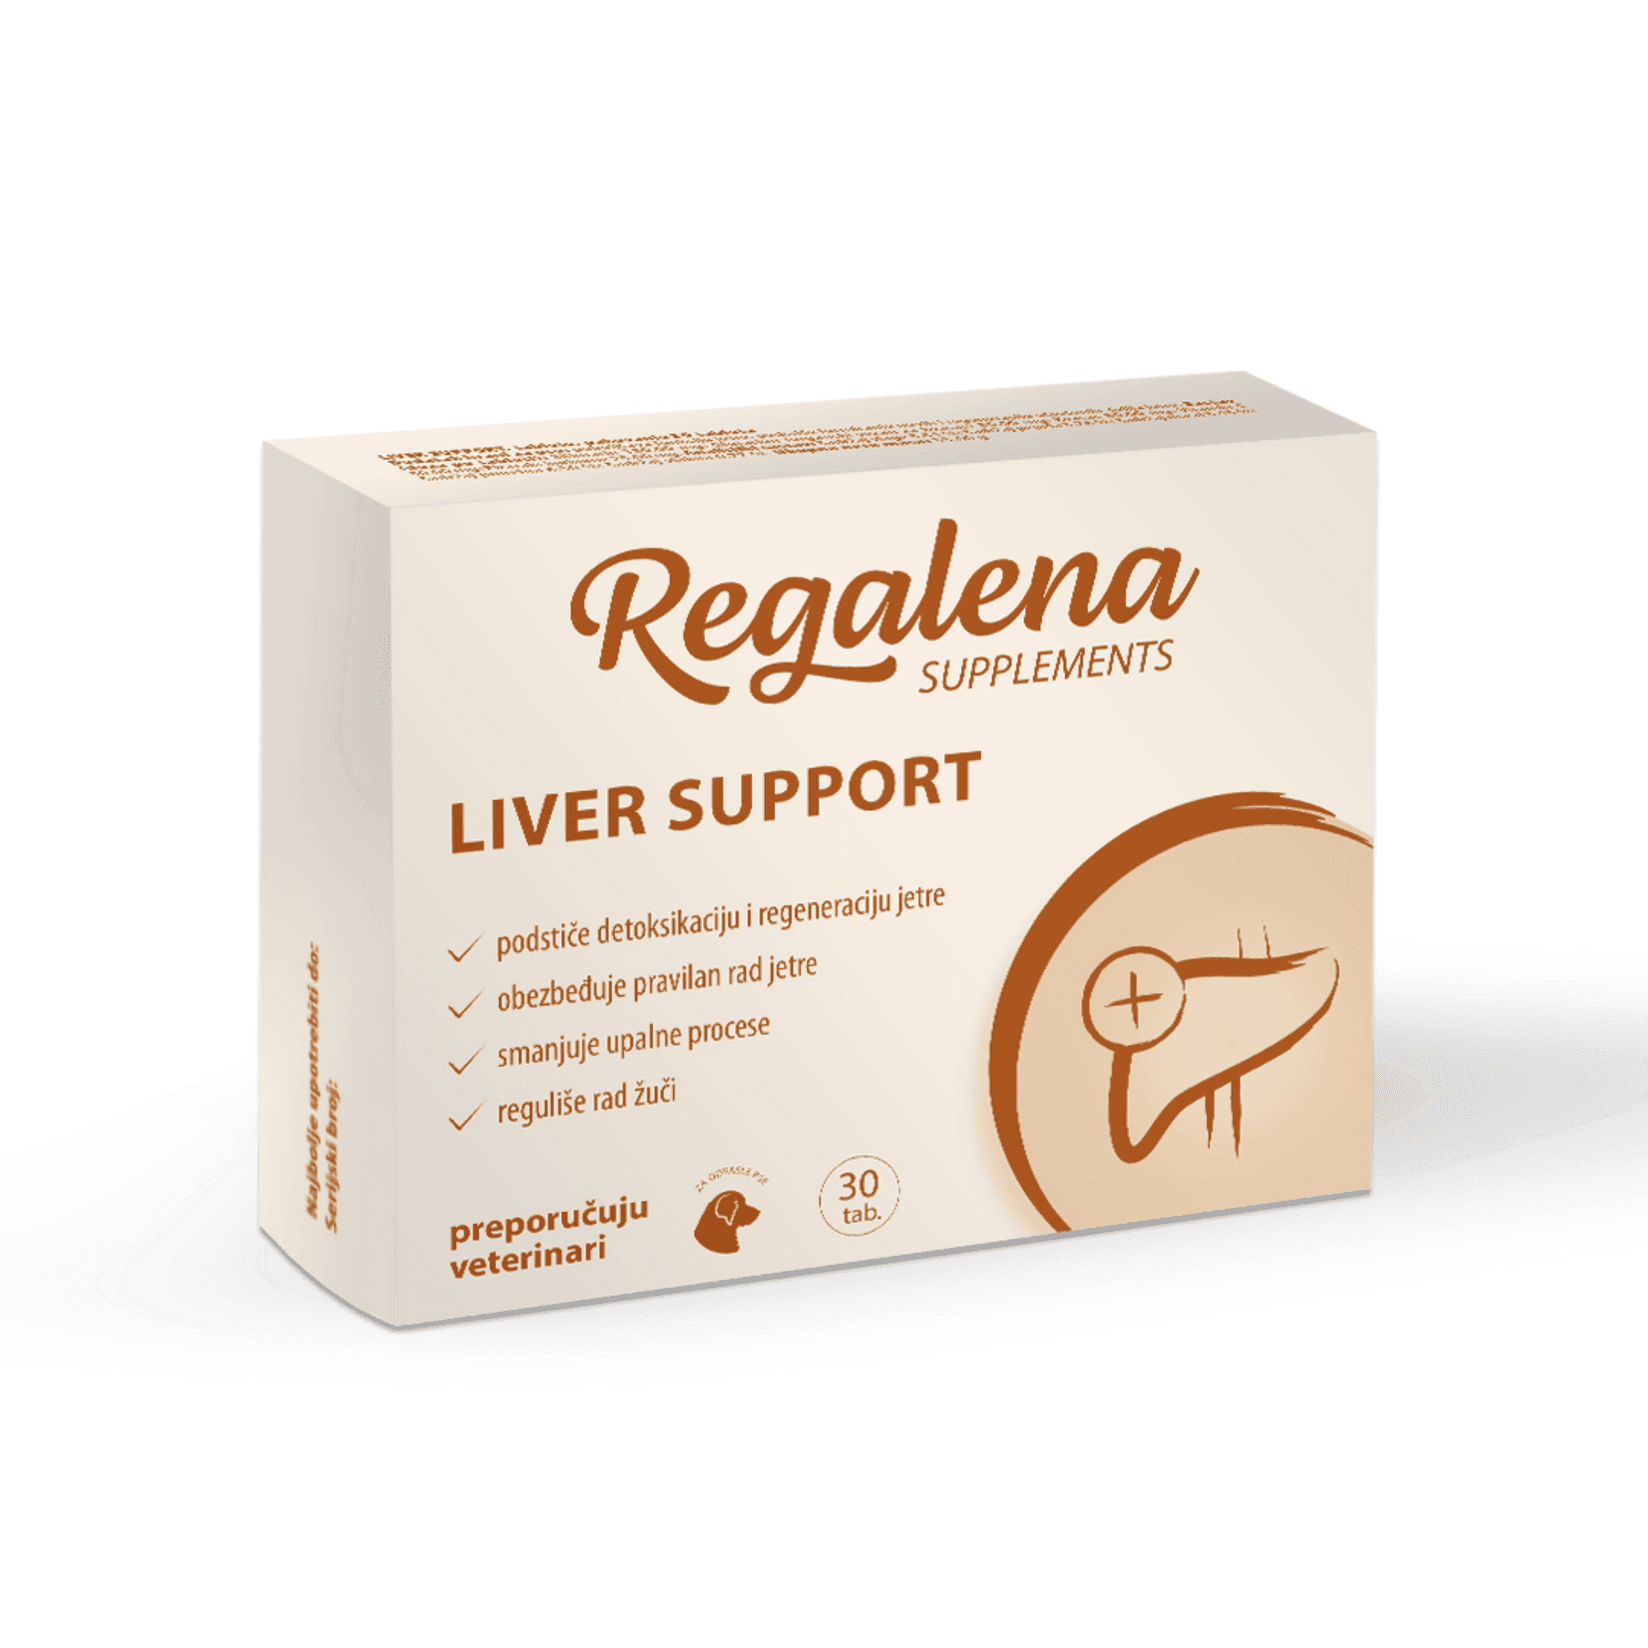 REGALENA Suplement za pse Liver Support tablete 30/1